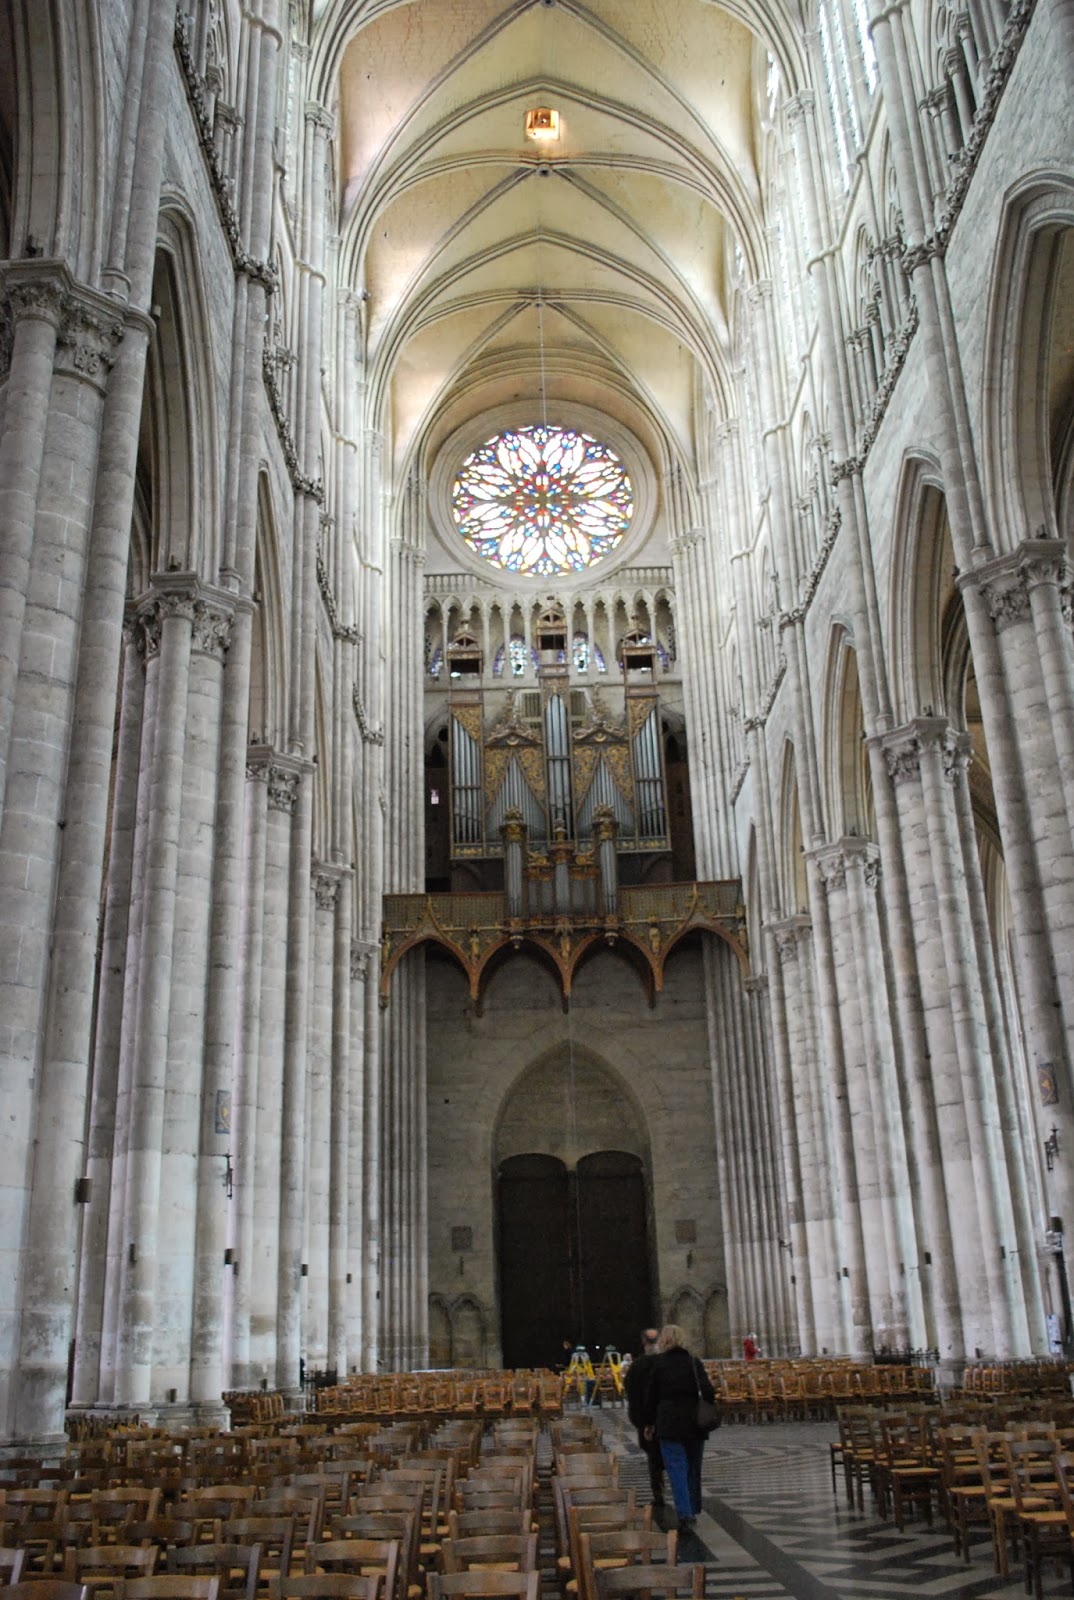 socalgalopenwallet: Inside Amiens cathedral